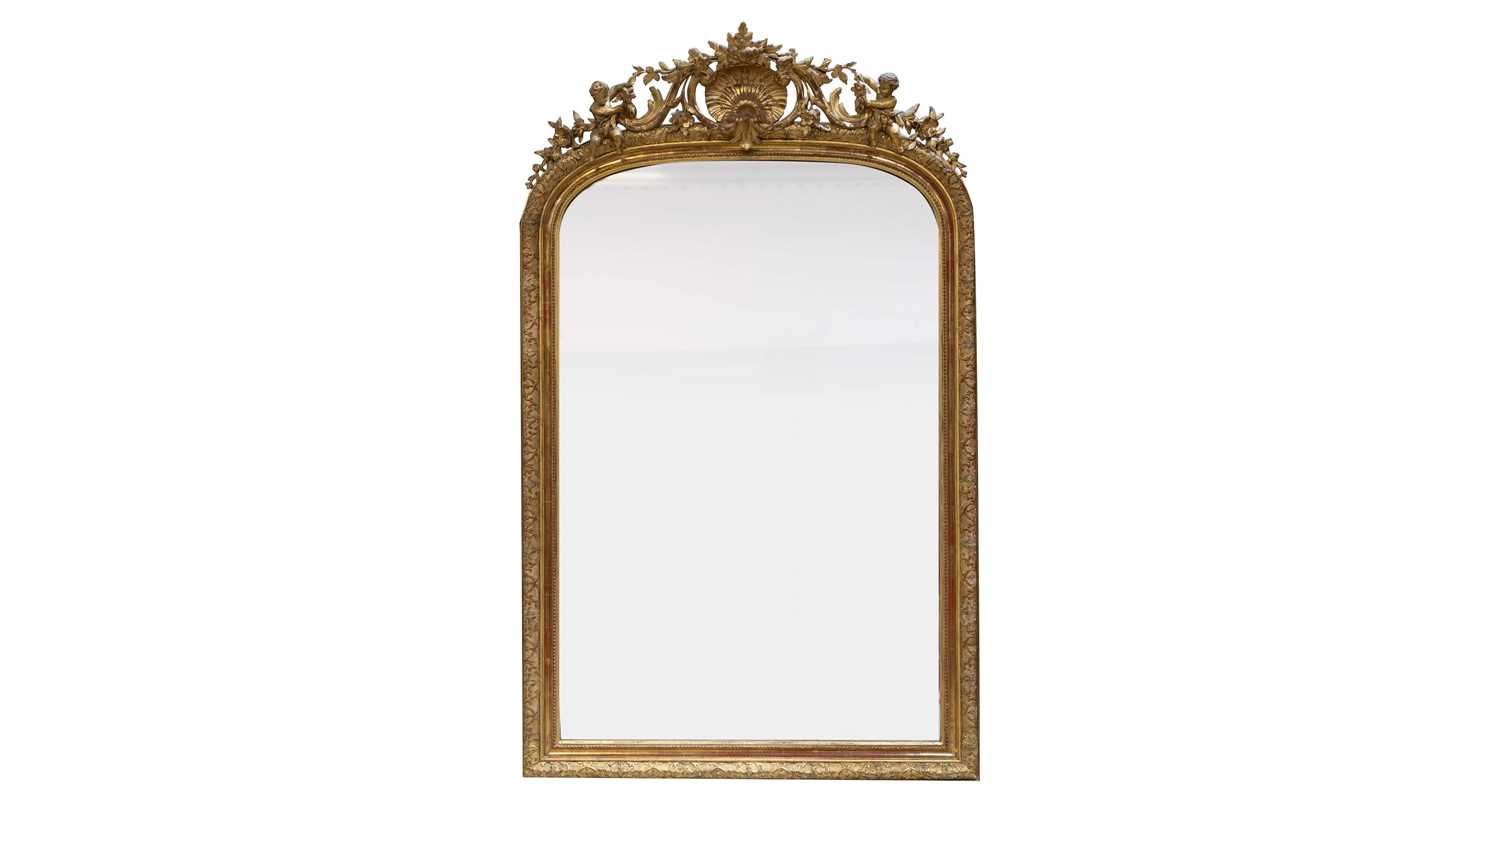 Lot 920 - Alexandre Jeune, Paris - An ornate late 19th Century French gilt mirror